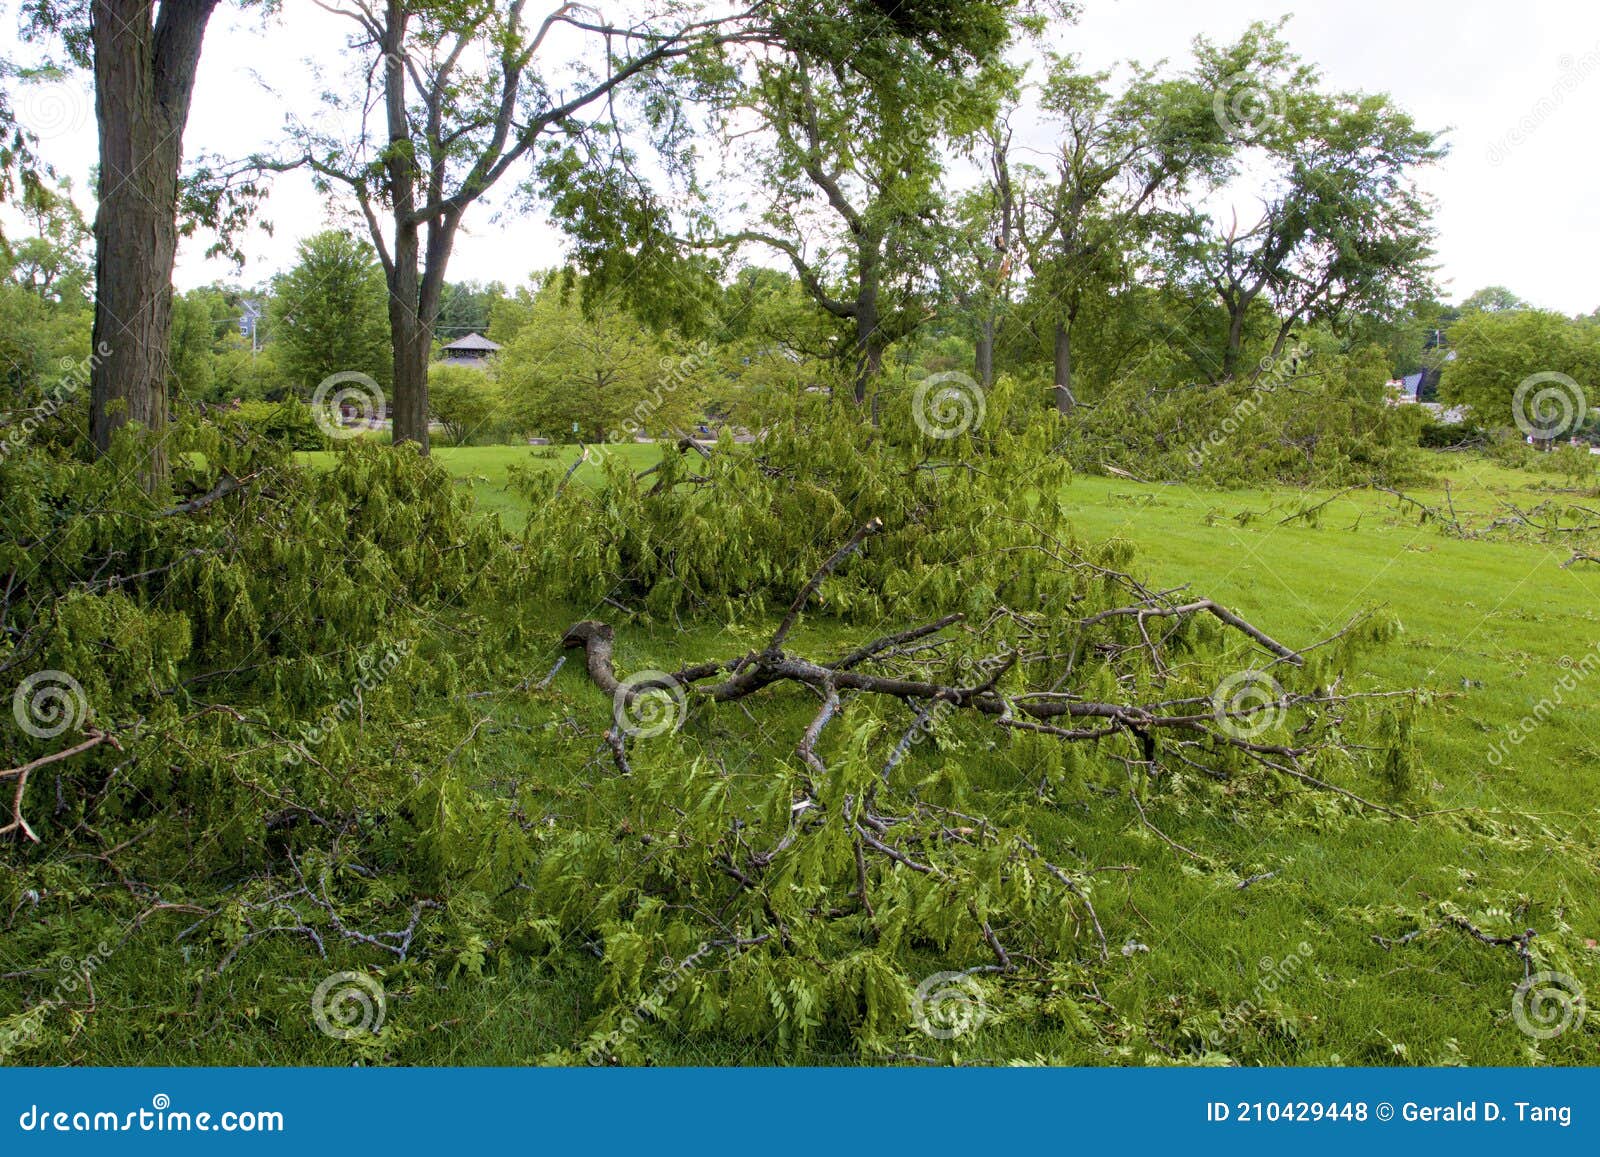 trees damaged by derecho in elgin   844219